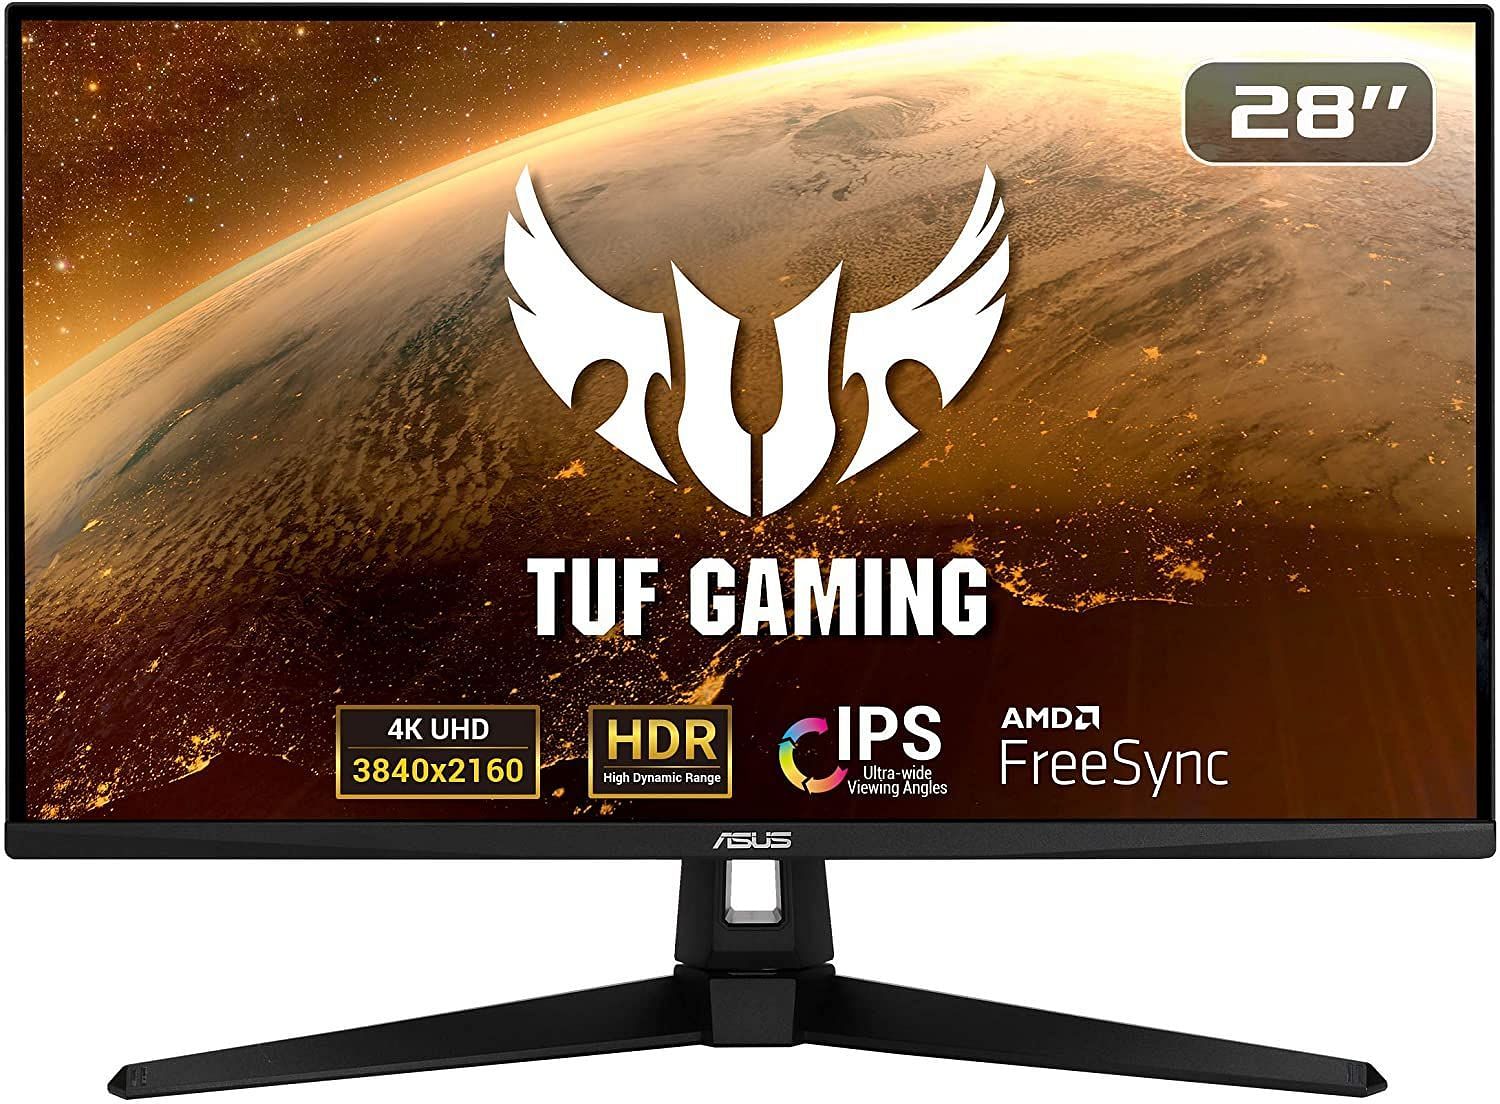 The Asus TUF Gaming Monitor (Image via Asus)